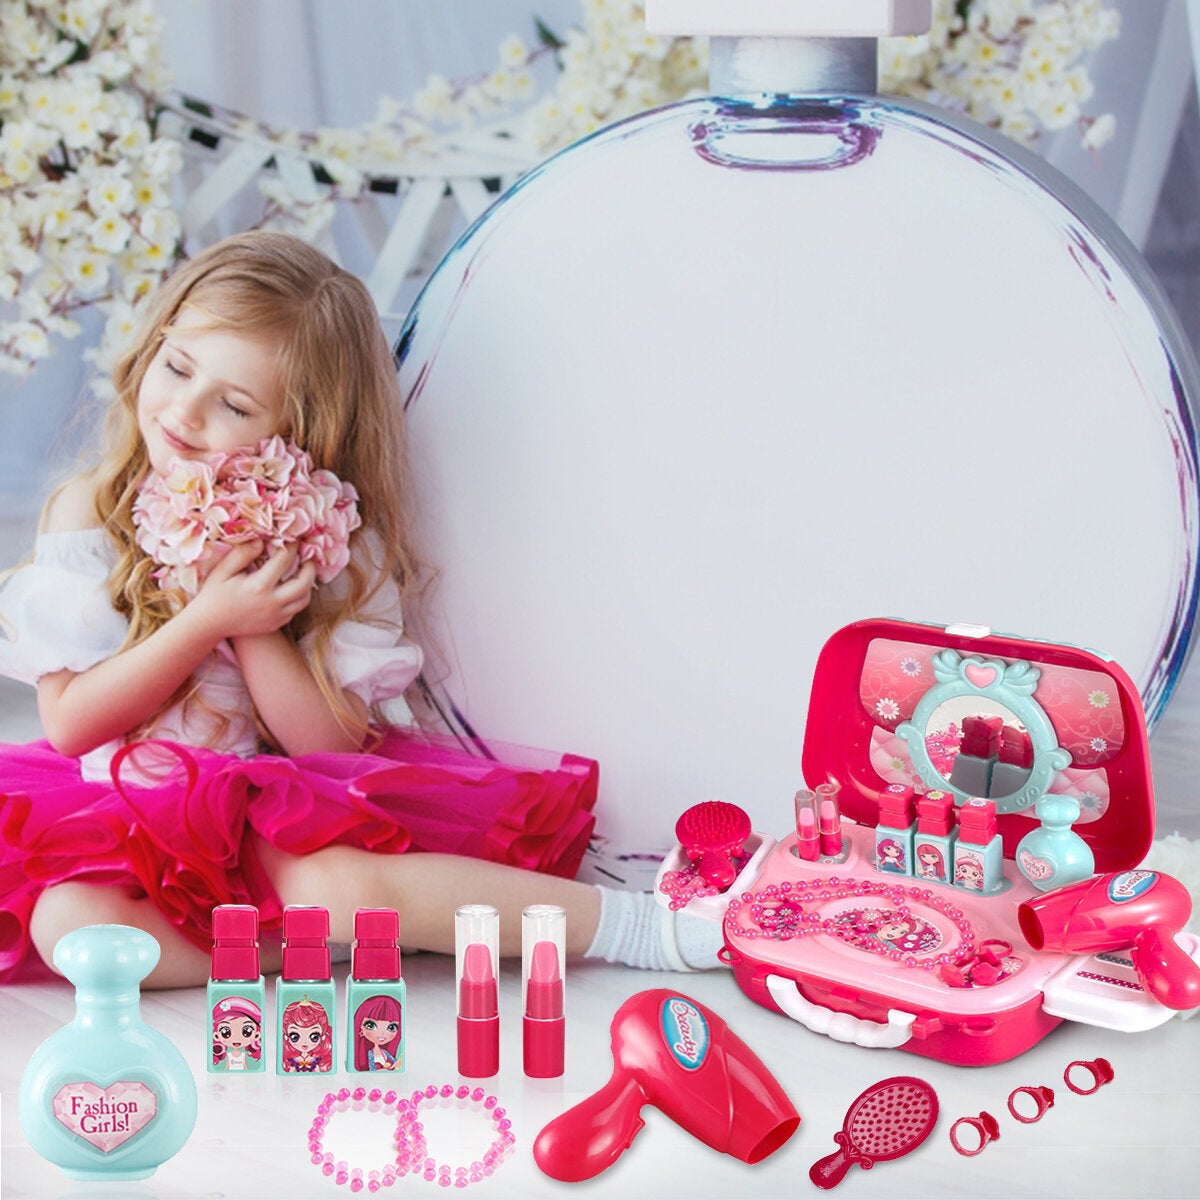 Play Makeup for Girl, Princess Dress-up Makeup Kit for Kids Holiday and Birthday Gifts